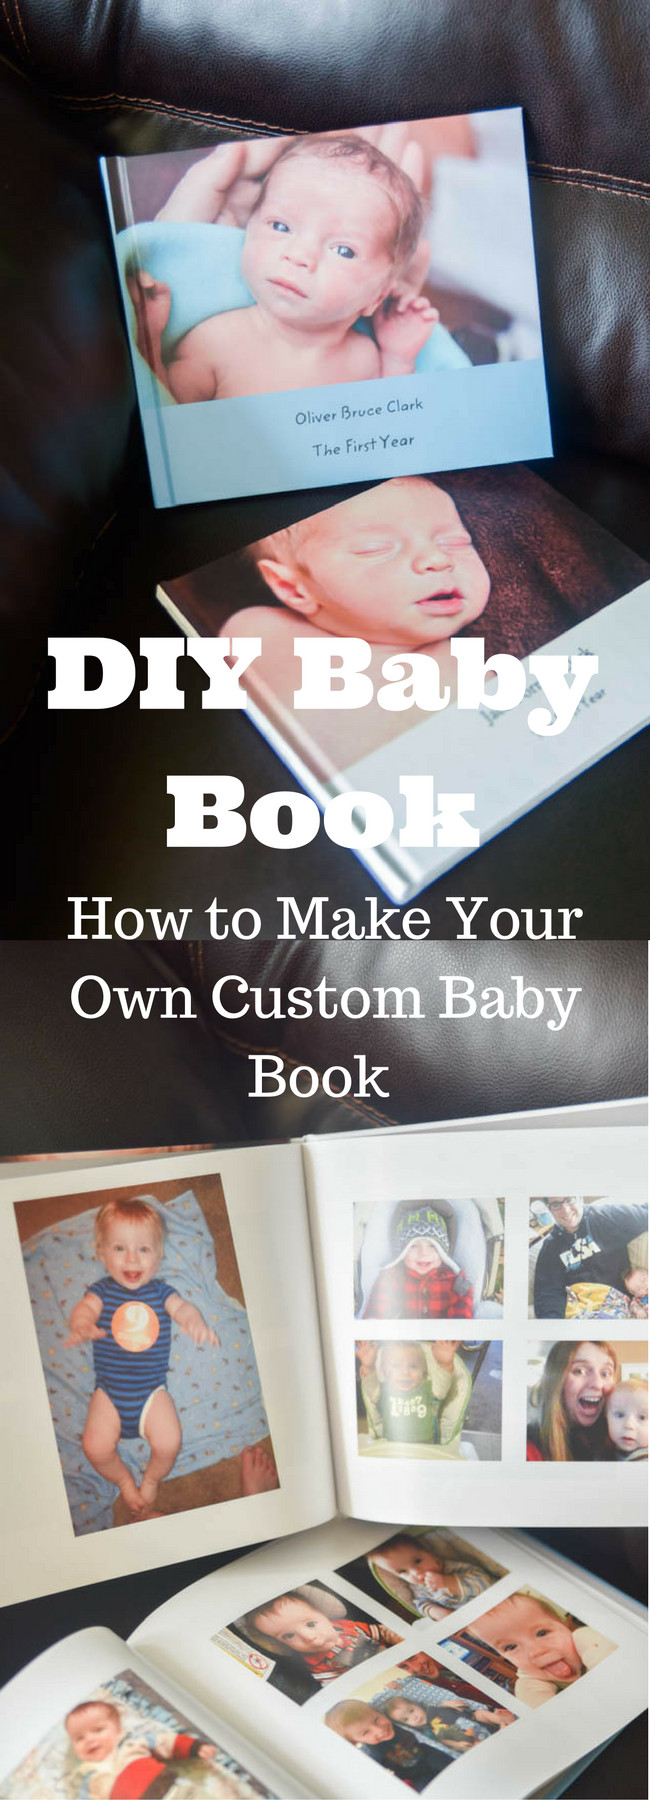 DIY Baby Book Ideas
 Make Your Own Baby Book DIY Baby Book